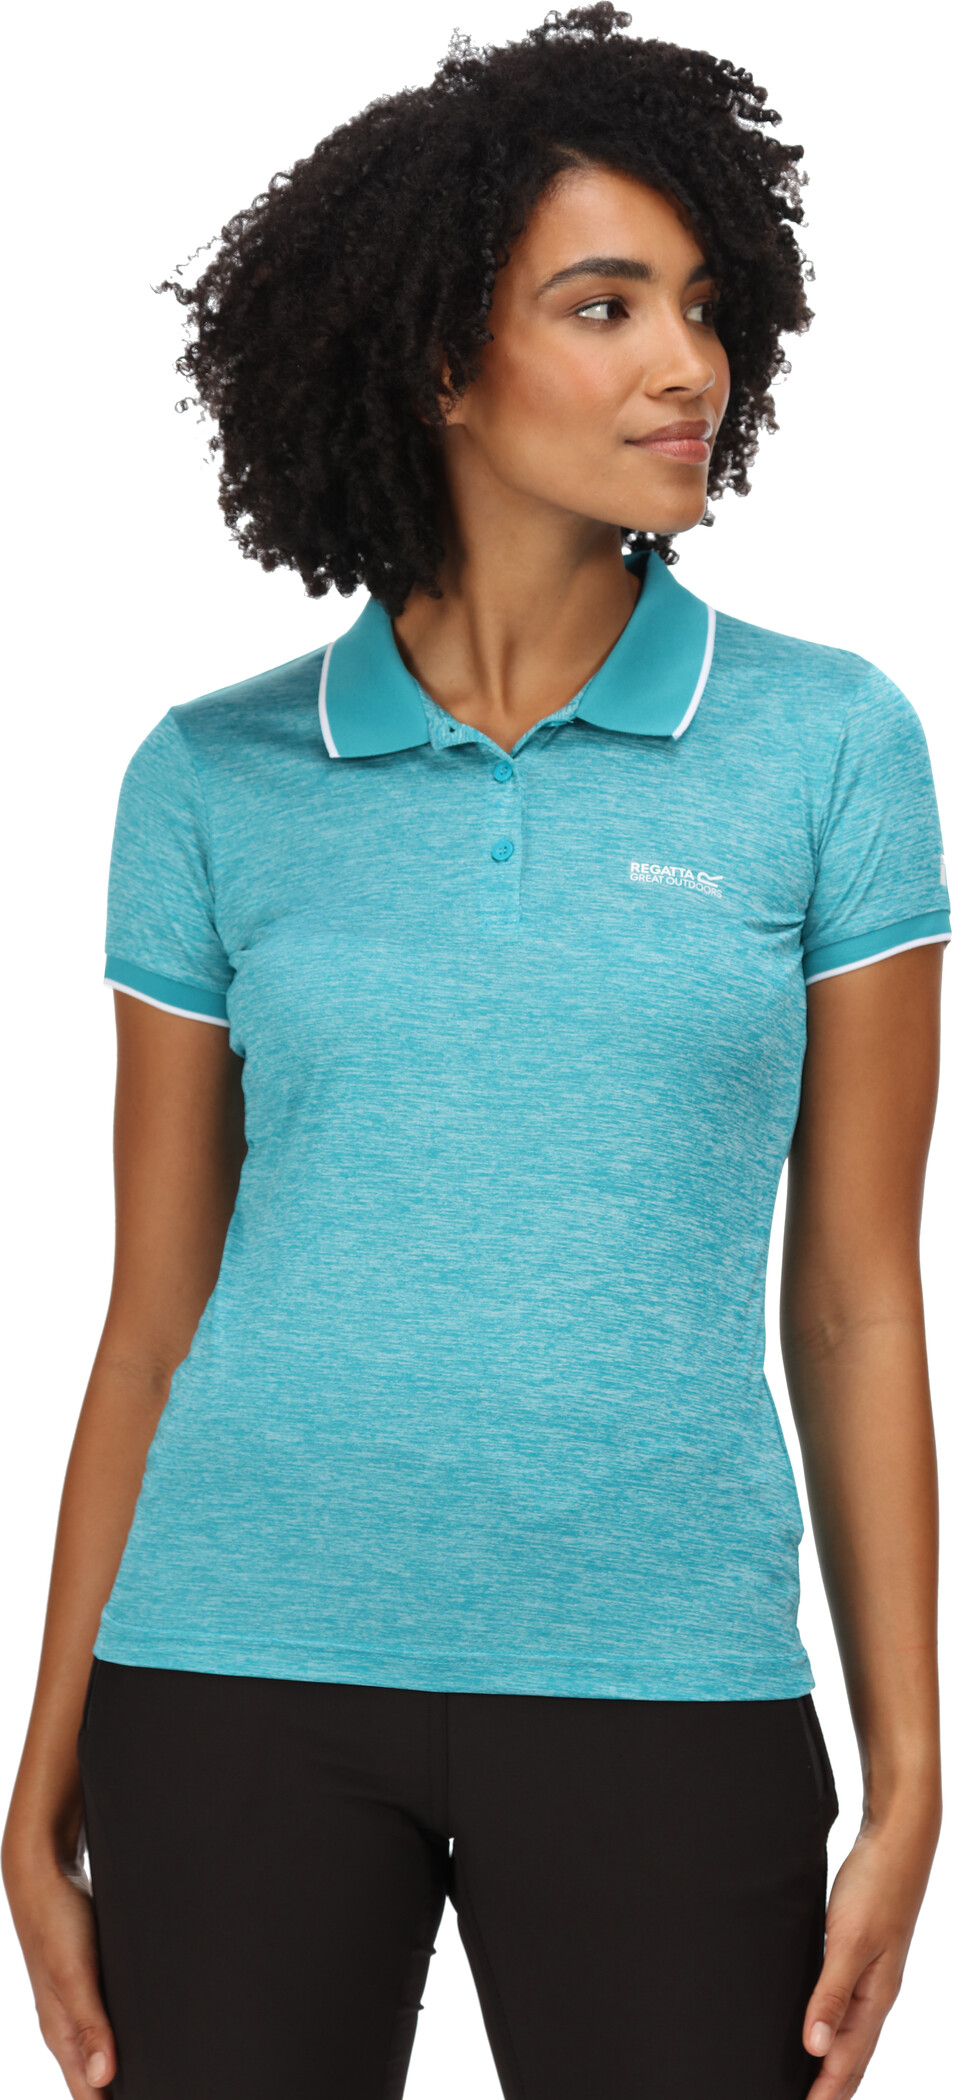 REGATTA MAVERICK V ACTIVE Damen Polo Shirt Funktions Shirt Piqué Shirt RWT210 